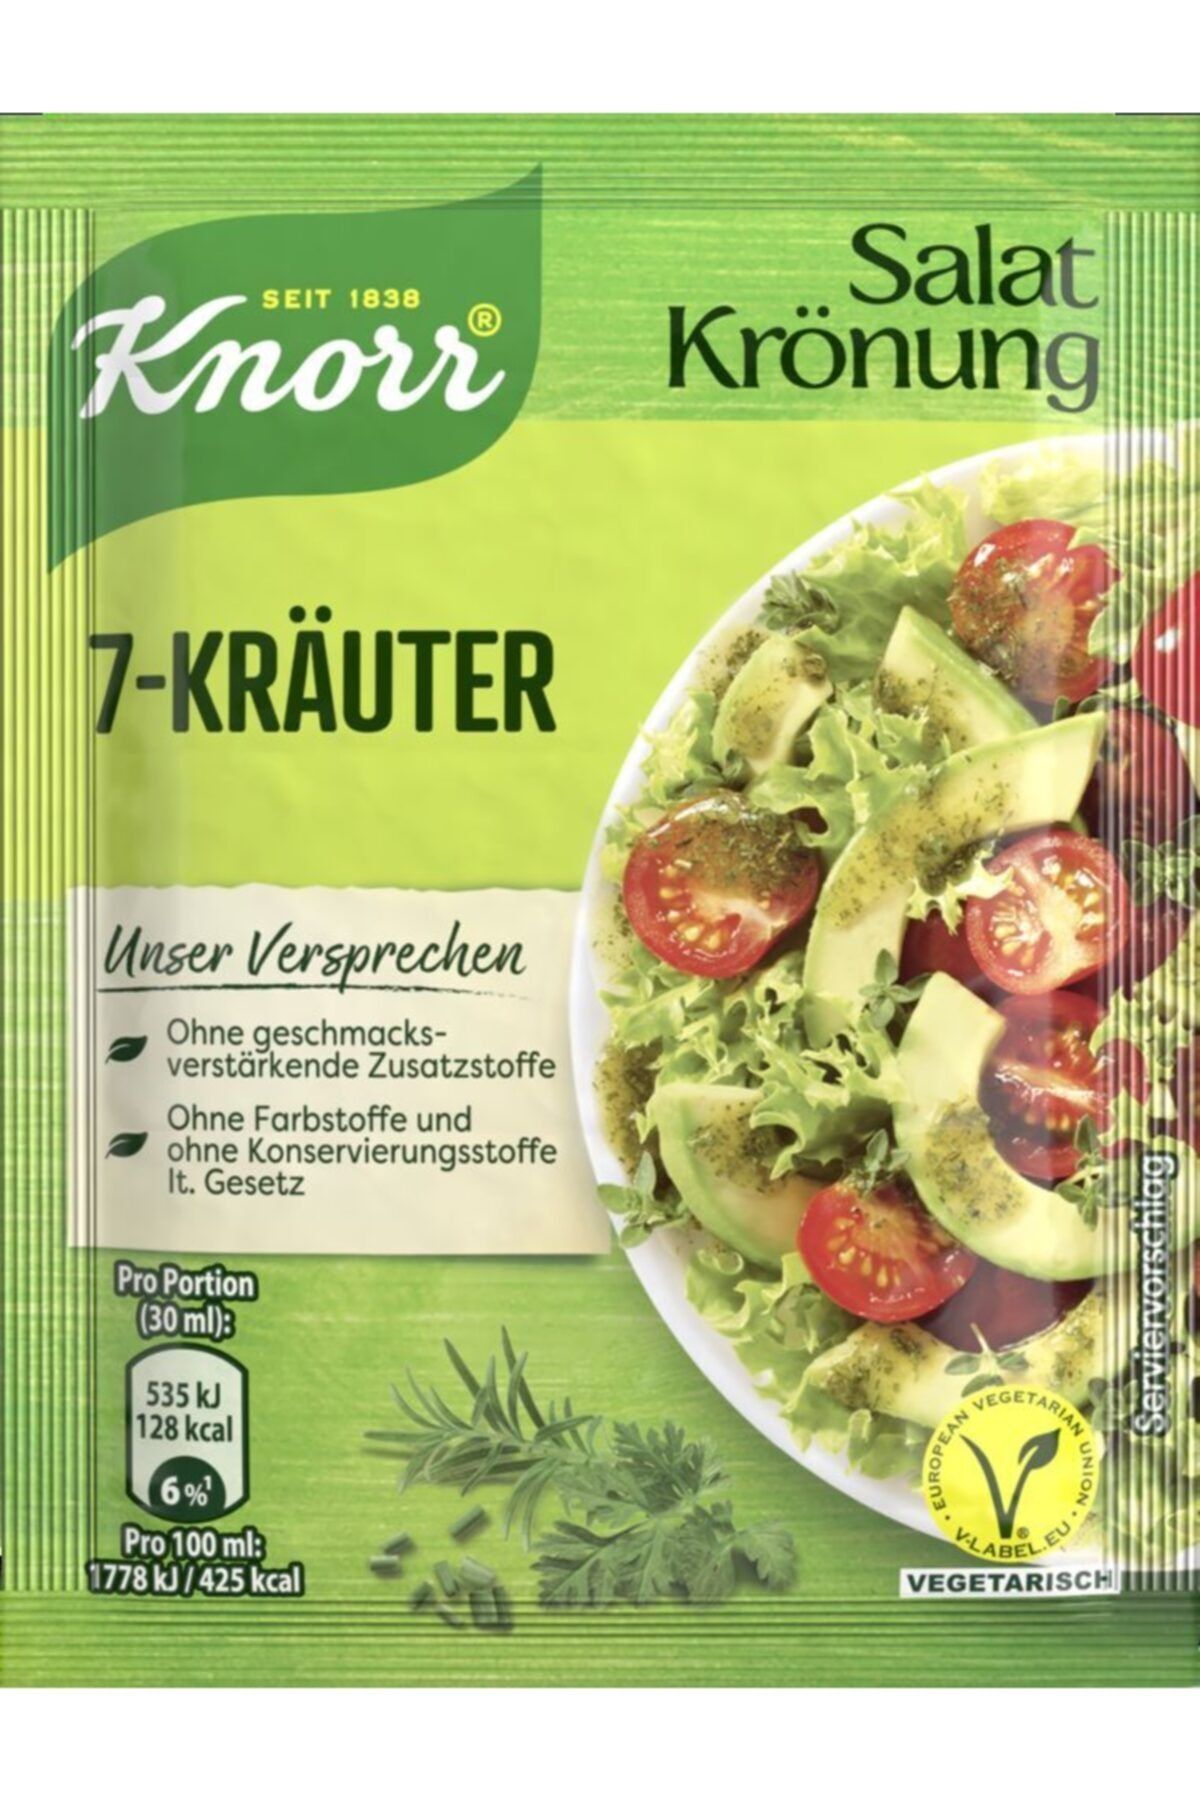 Knorr Salat Krönung 7-kratuer 5 Er Pack